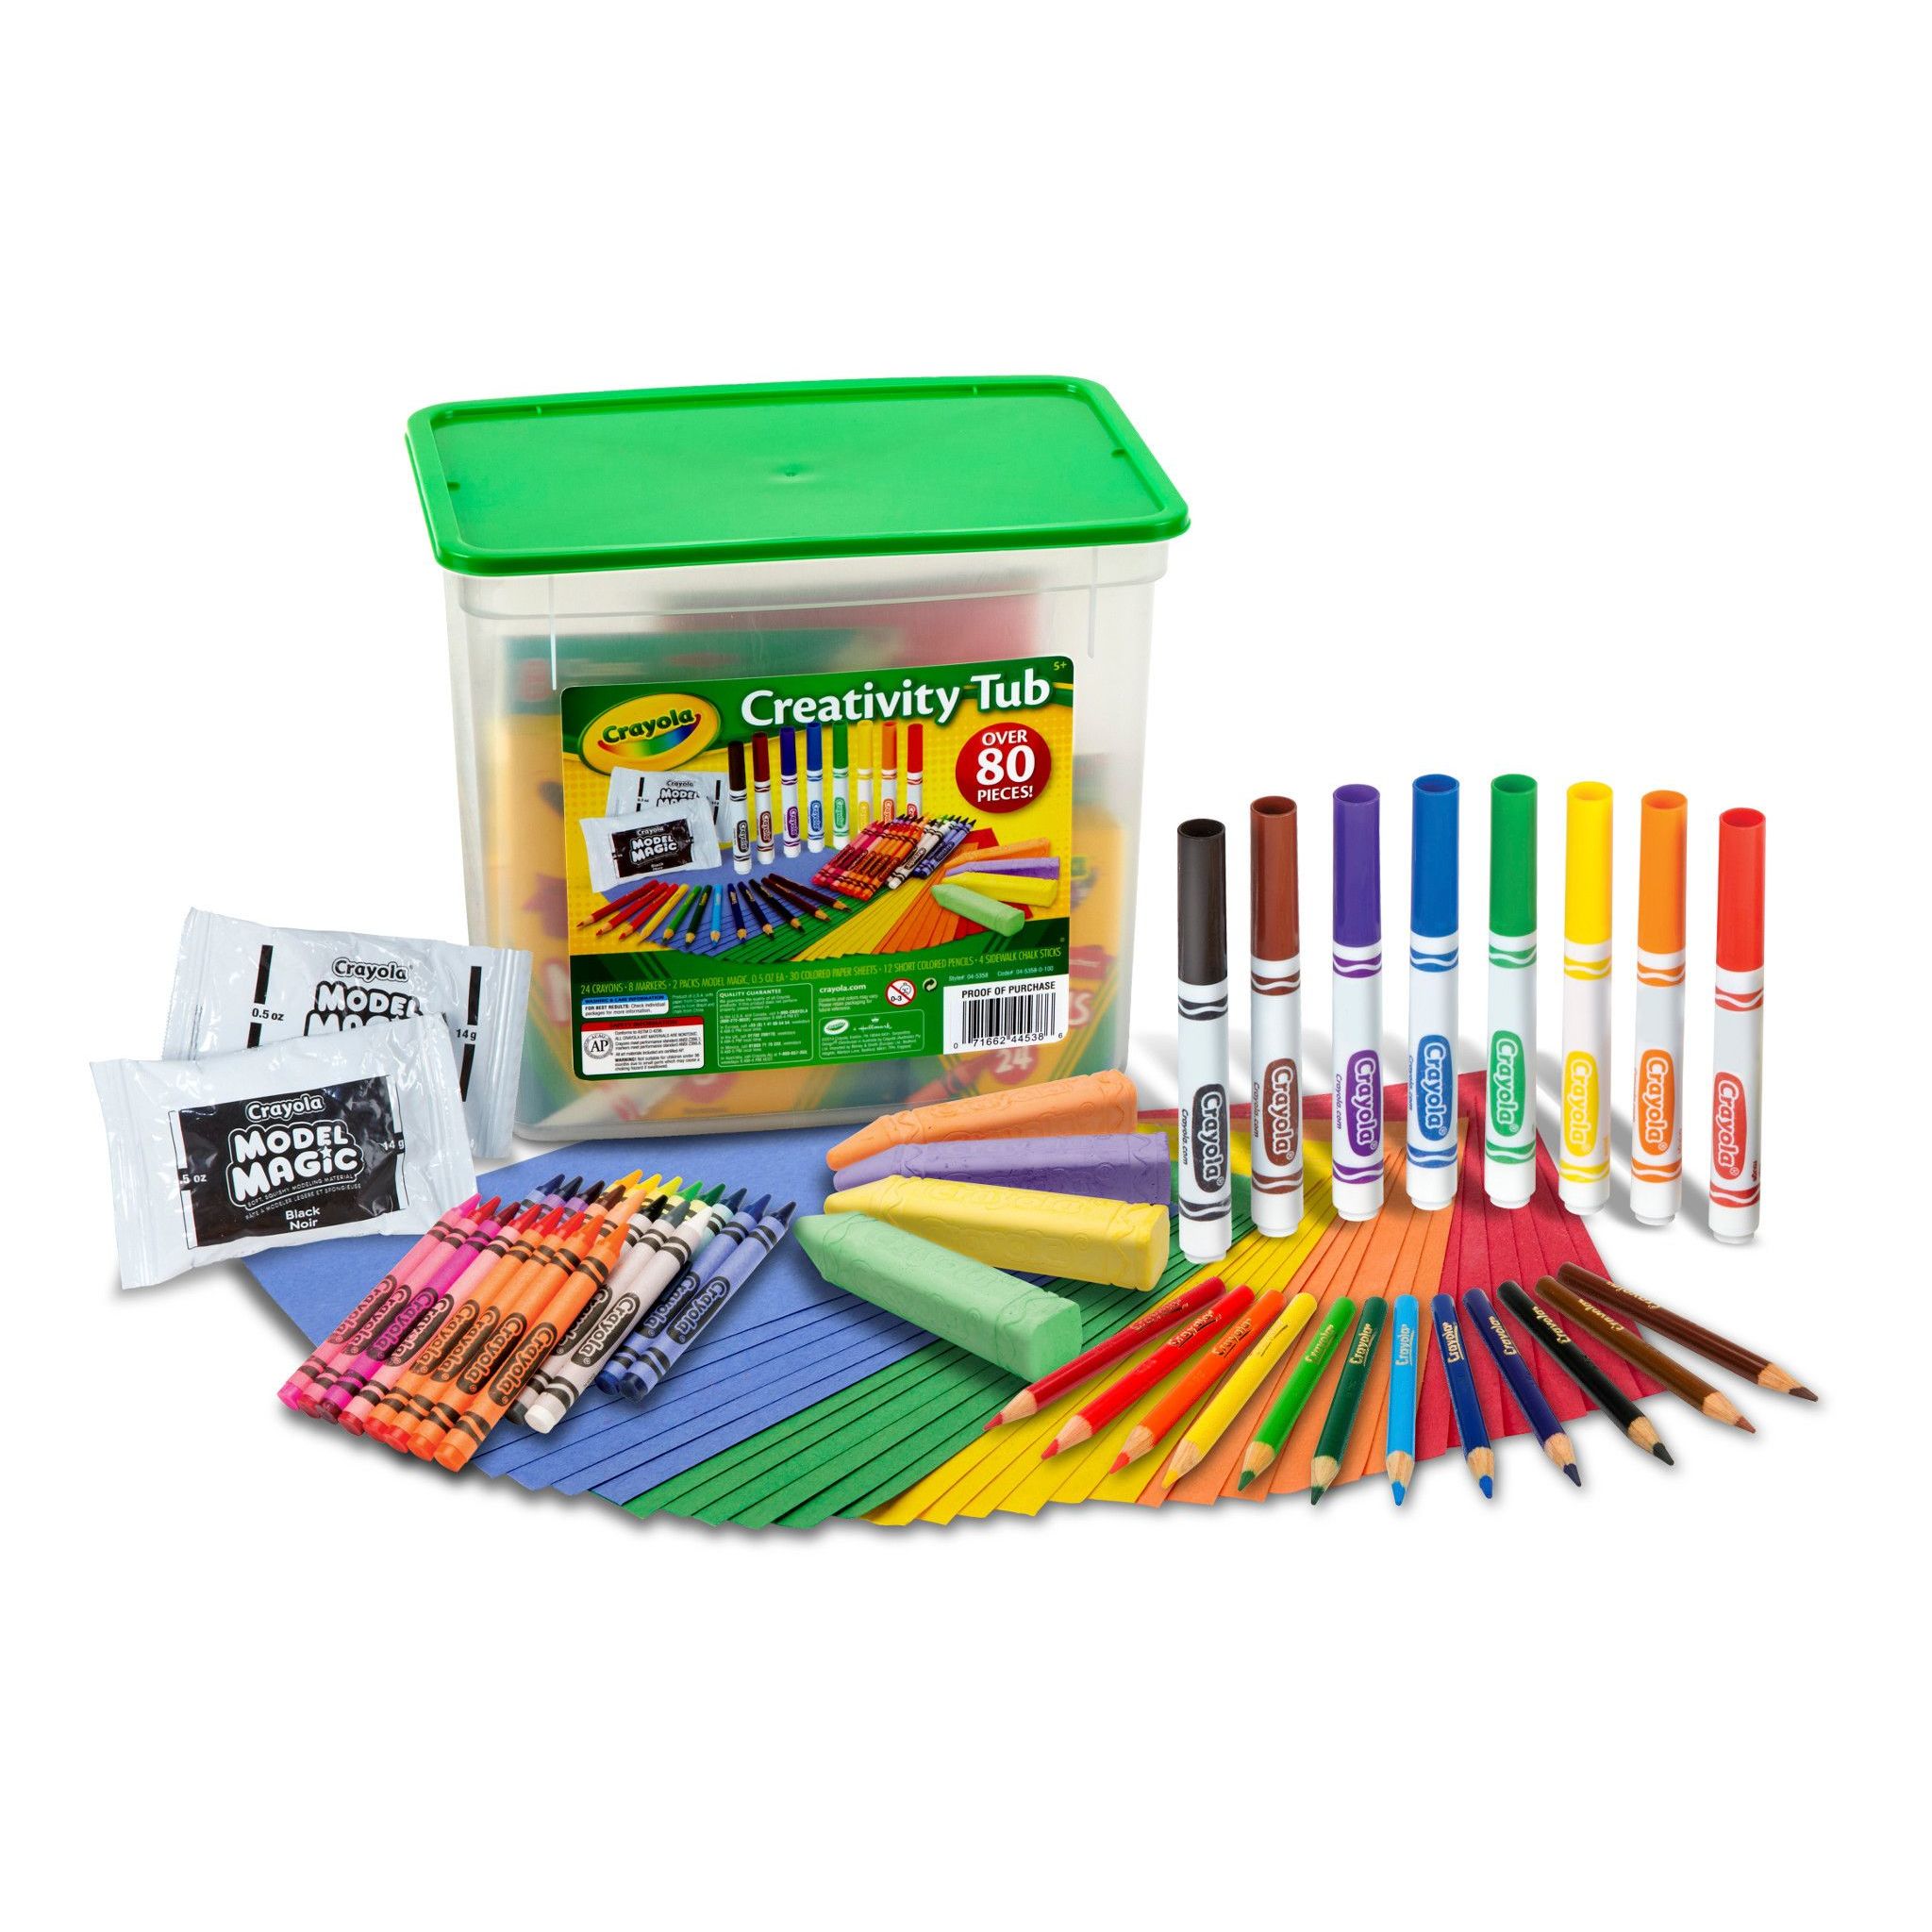 Crayola Creativity Tub Art Set, School Supplies, Ages 5+, 80 Pcs - image 1 of 8